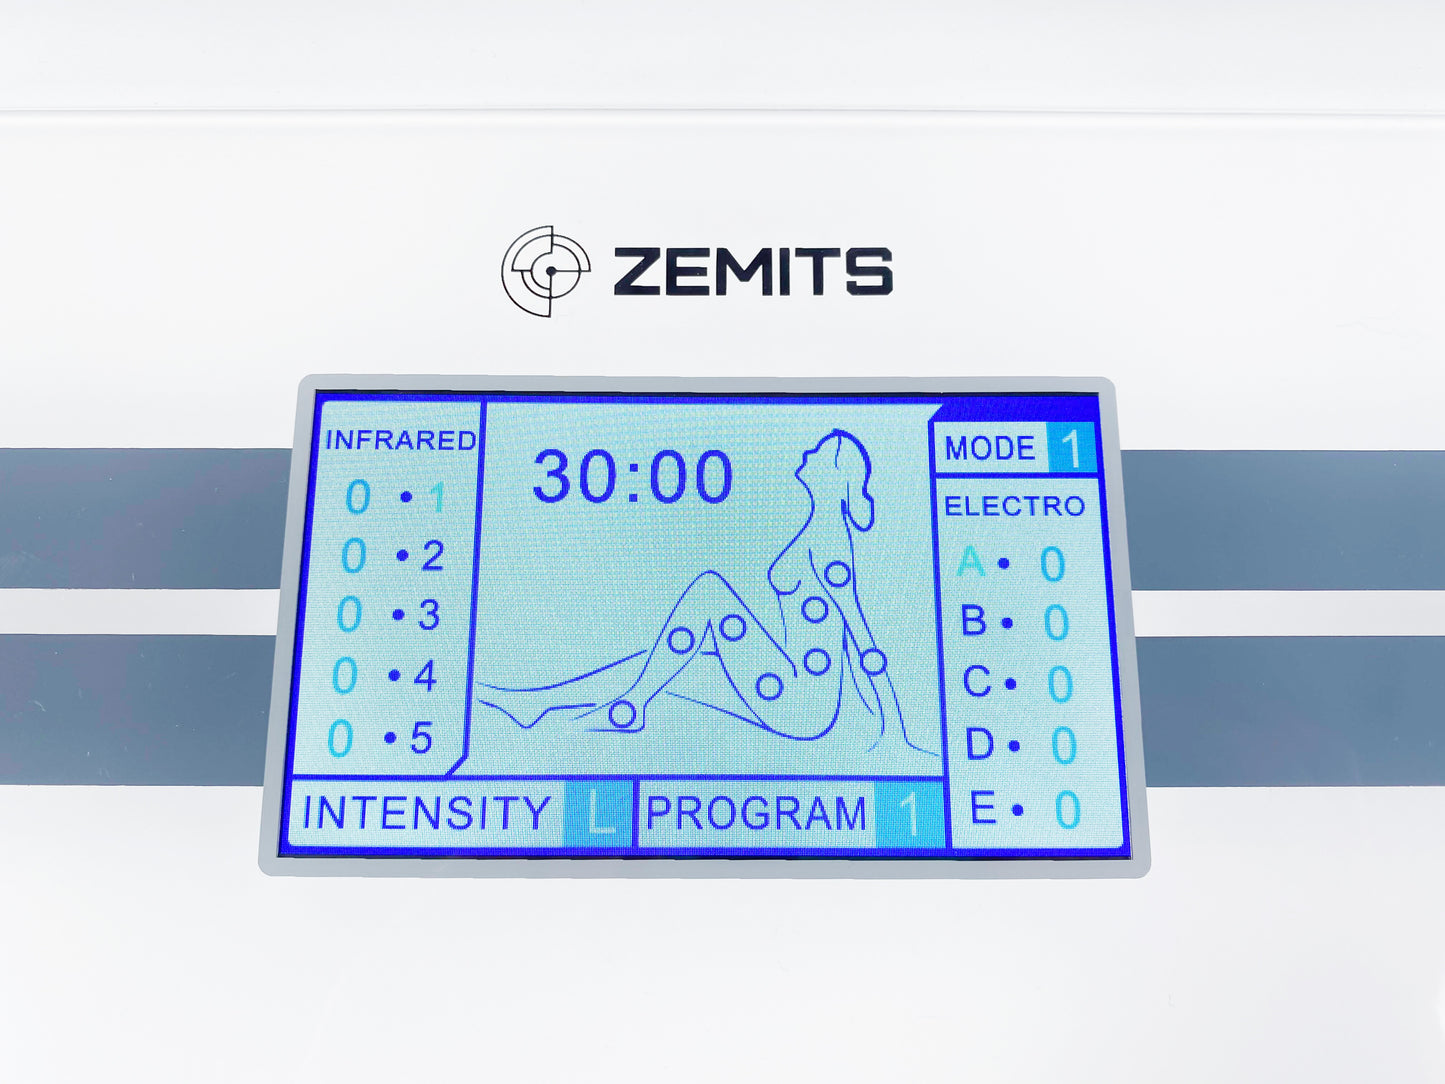 Zemits PressMio 3-in-1 Pressotherapy System